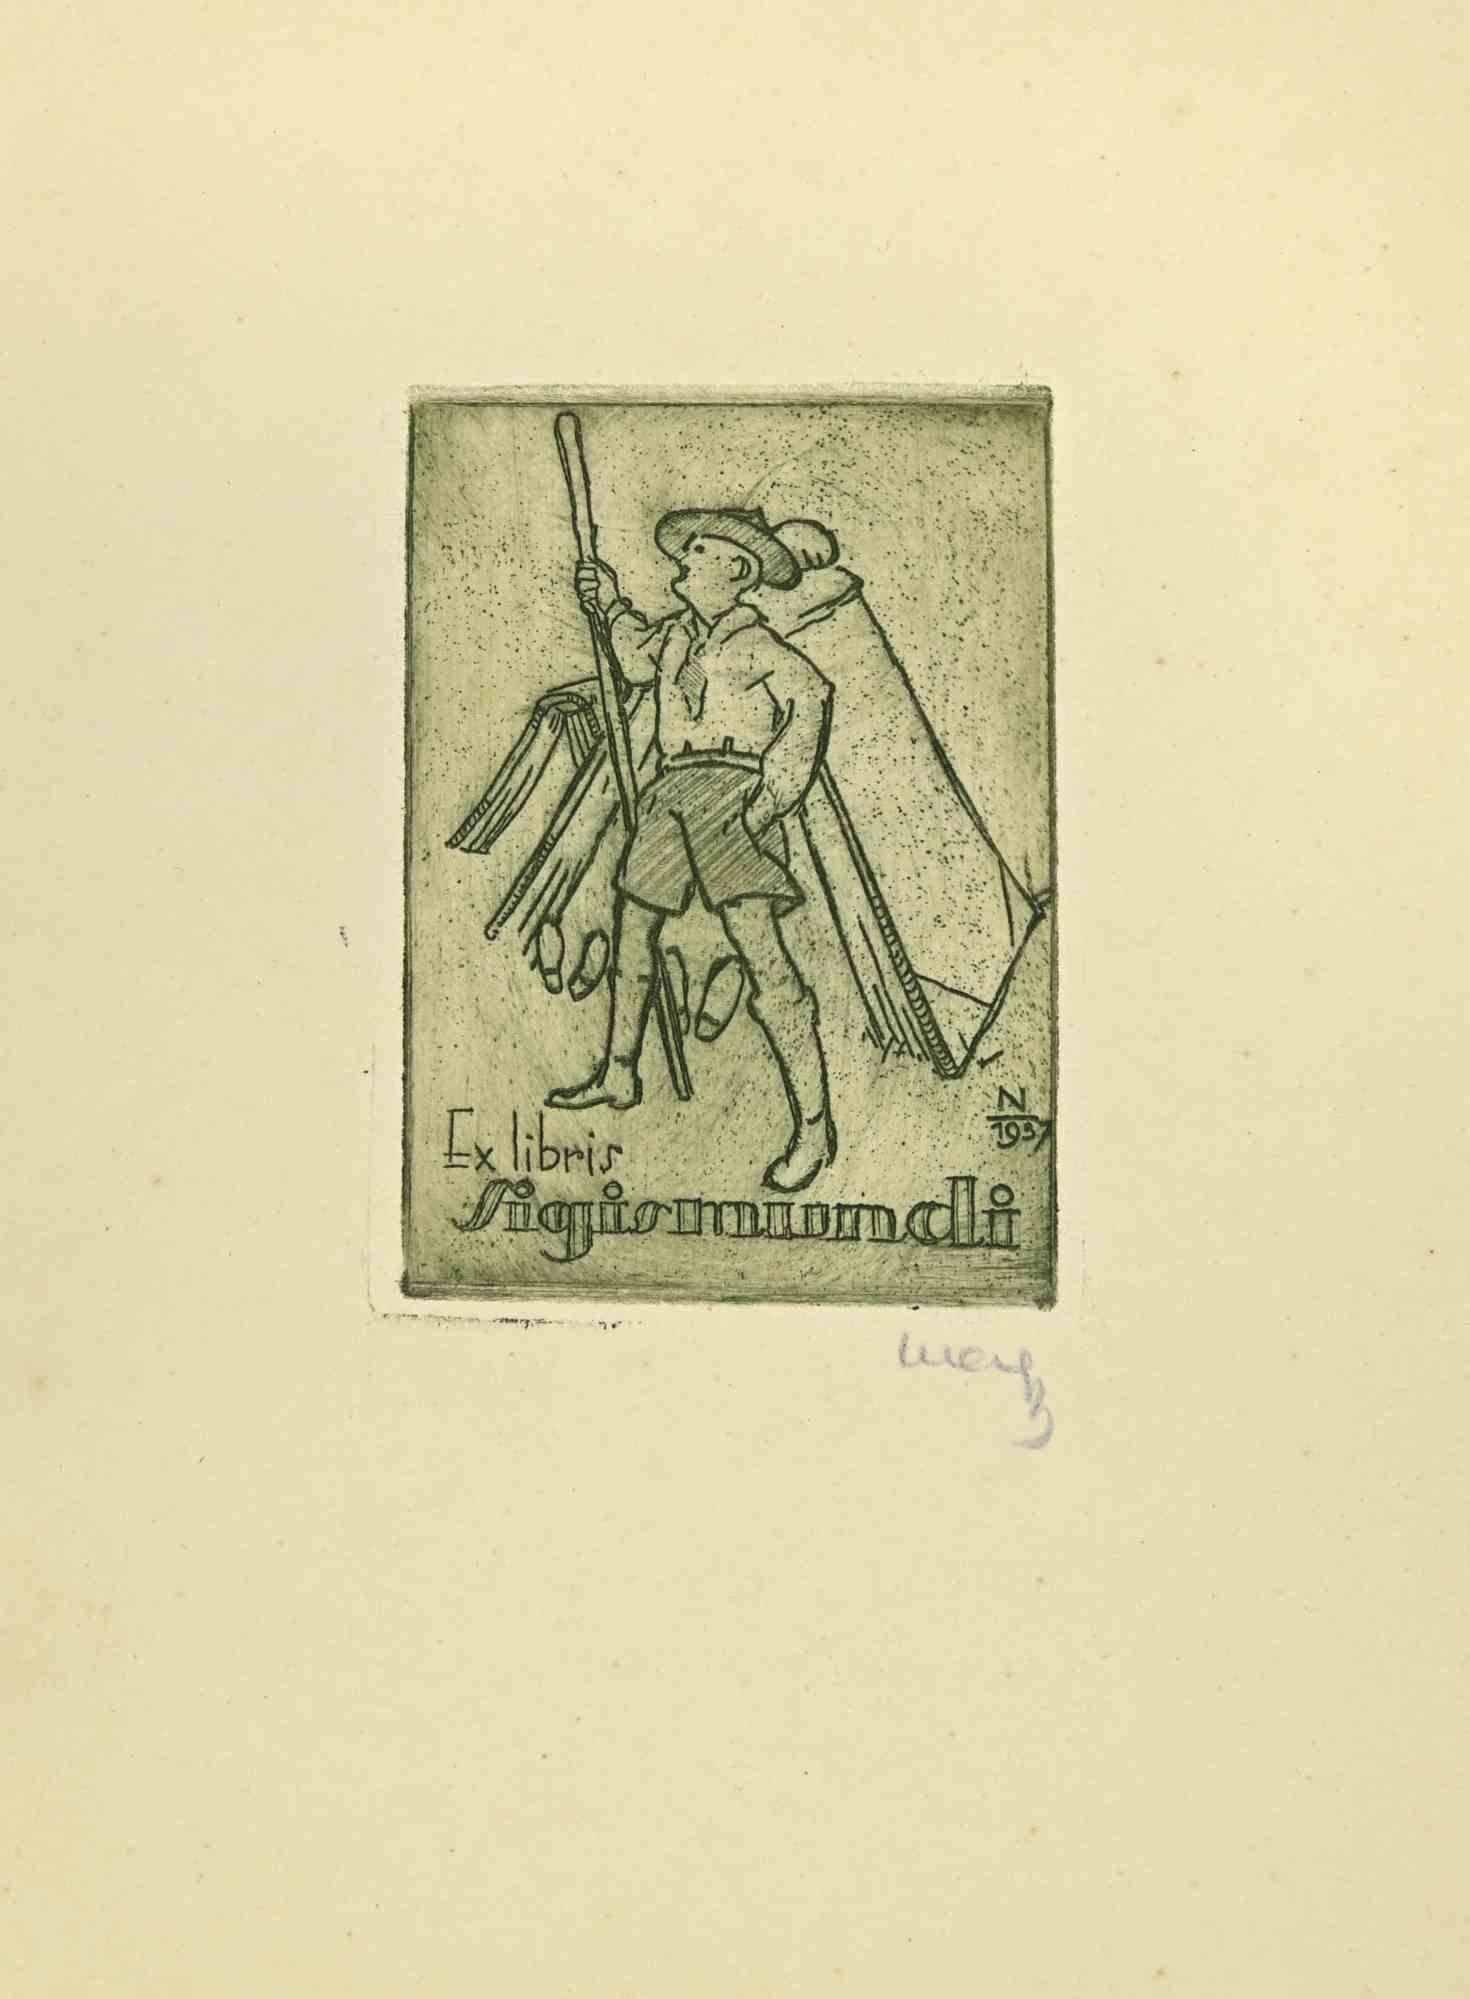 Unknown Figurative Print - Ex Libris - Sigismundi - woodcut - 1957